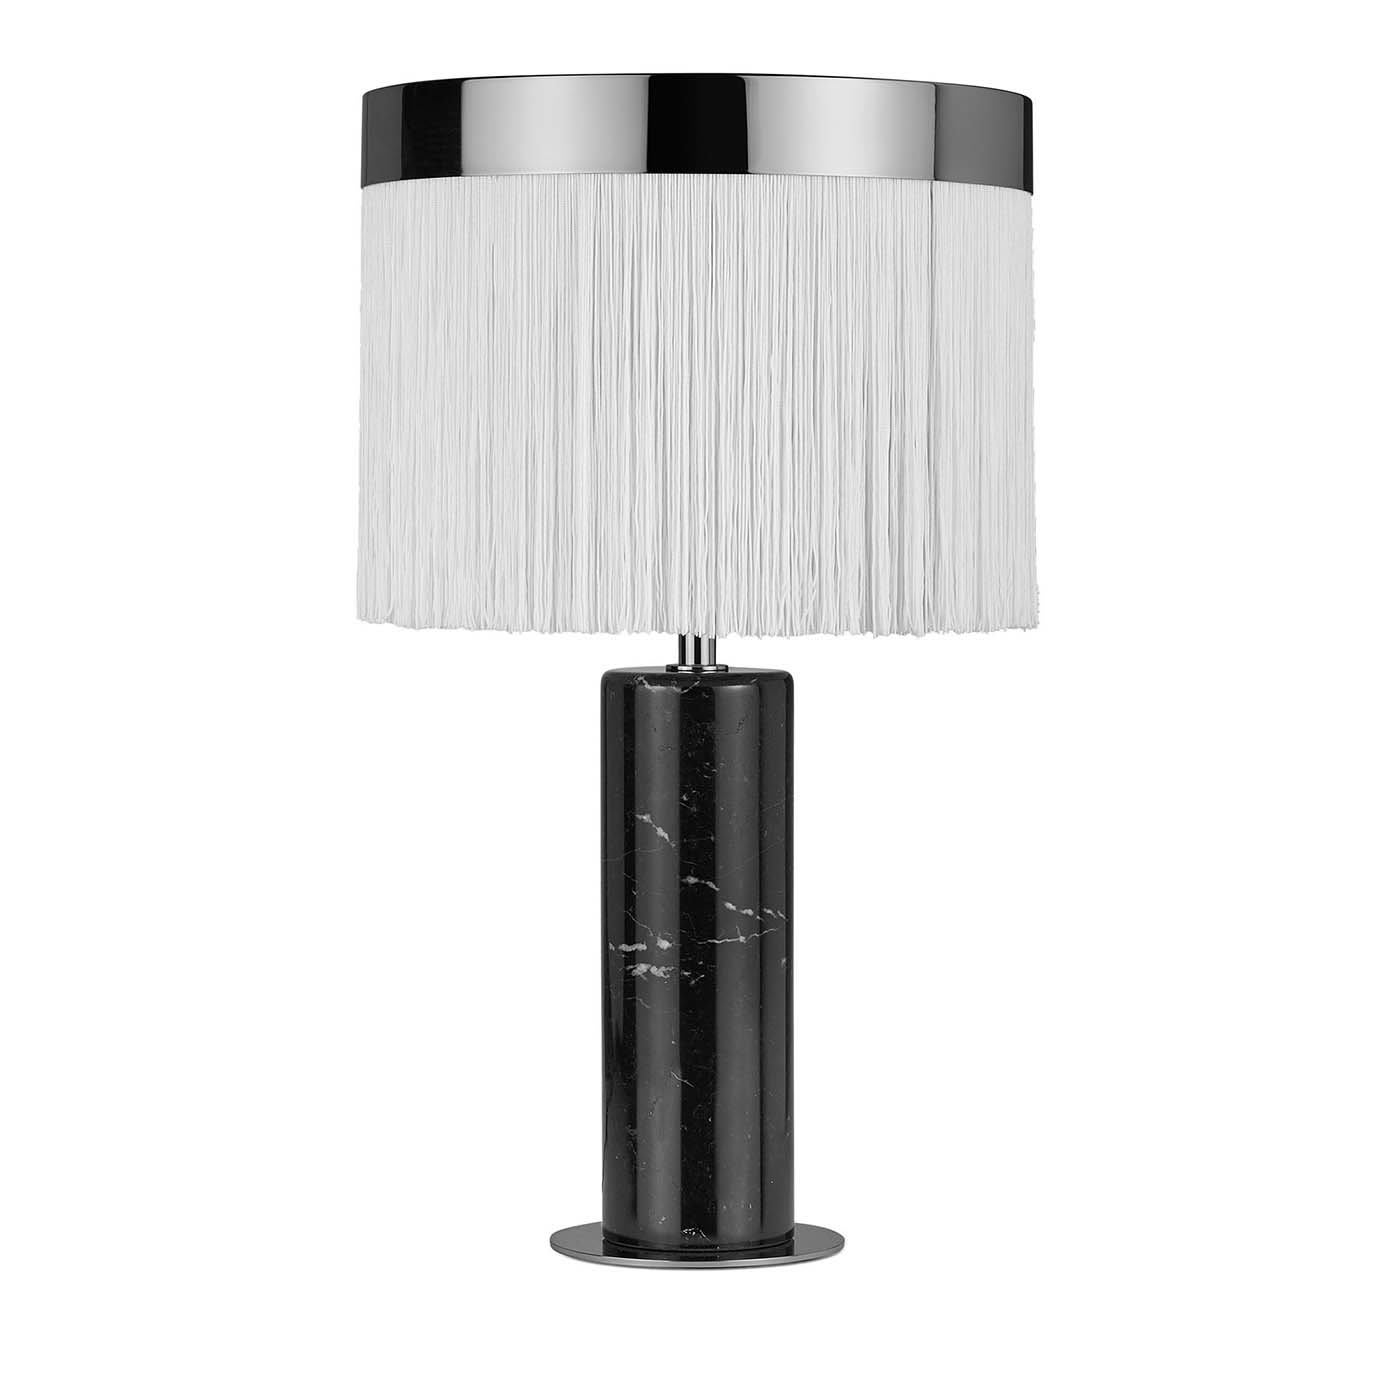 Orsola Black & White Table Lamp by Lorenza Bozzoli - Tato